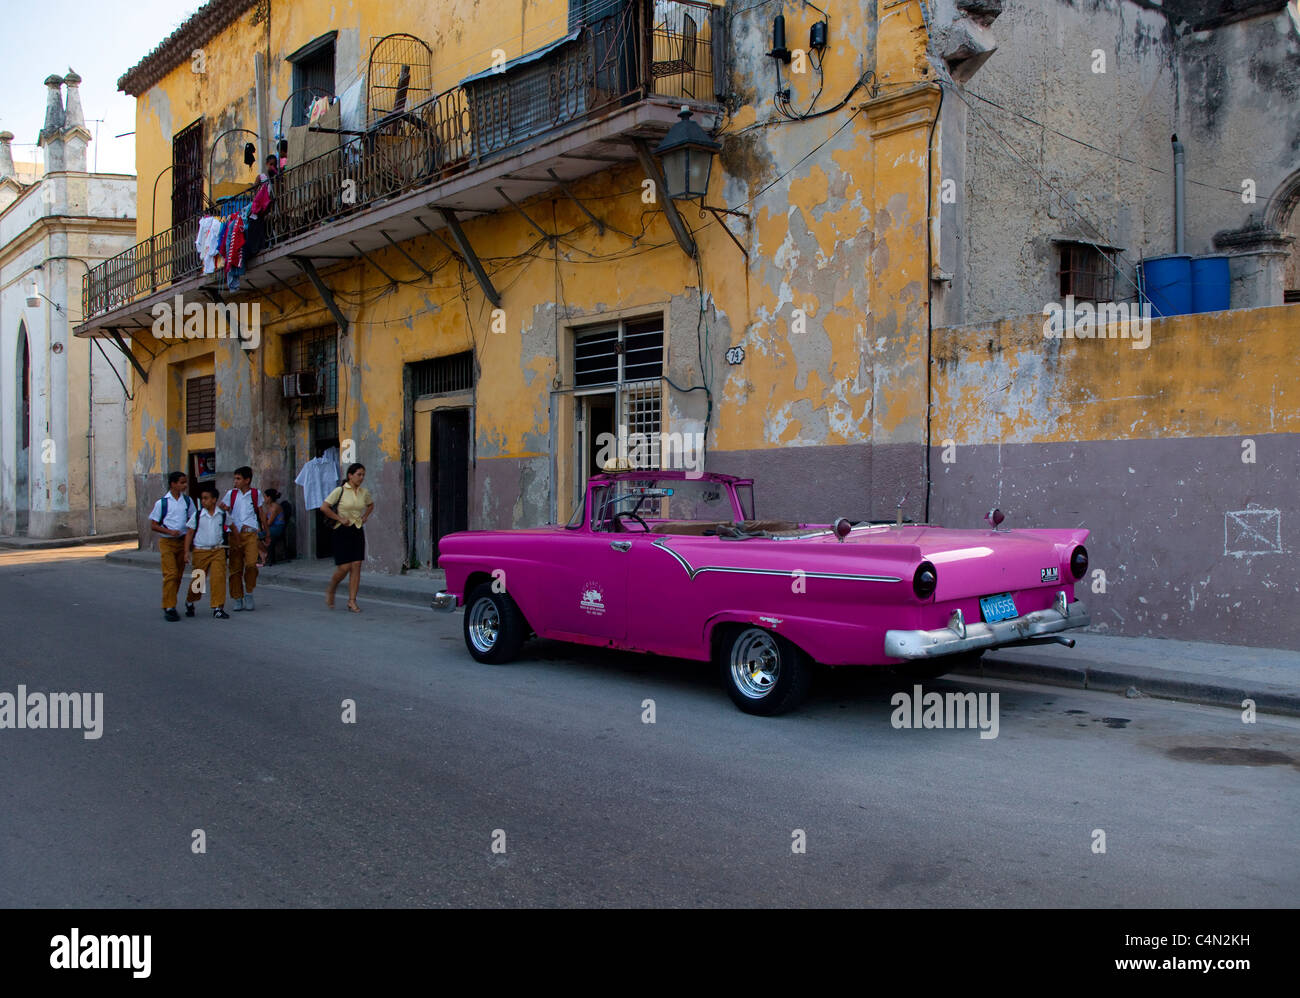 School children walk home along the streets of old town Havana, Cuba. Stock Photo